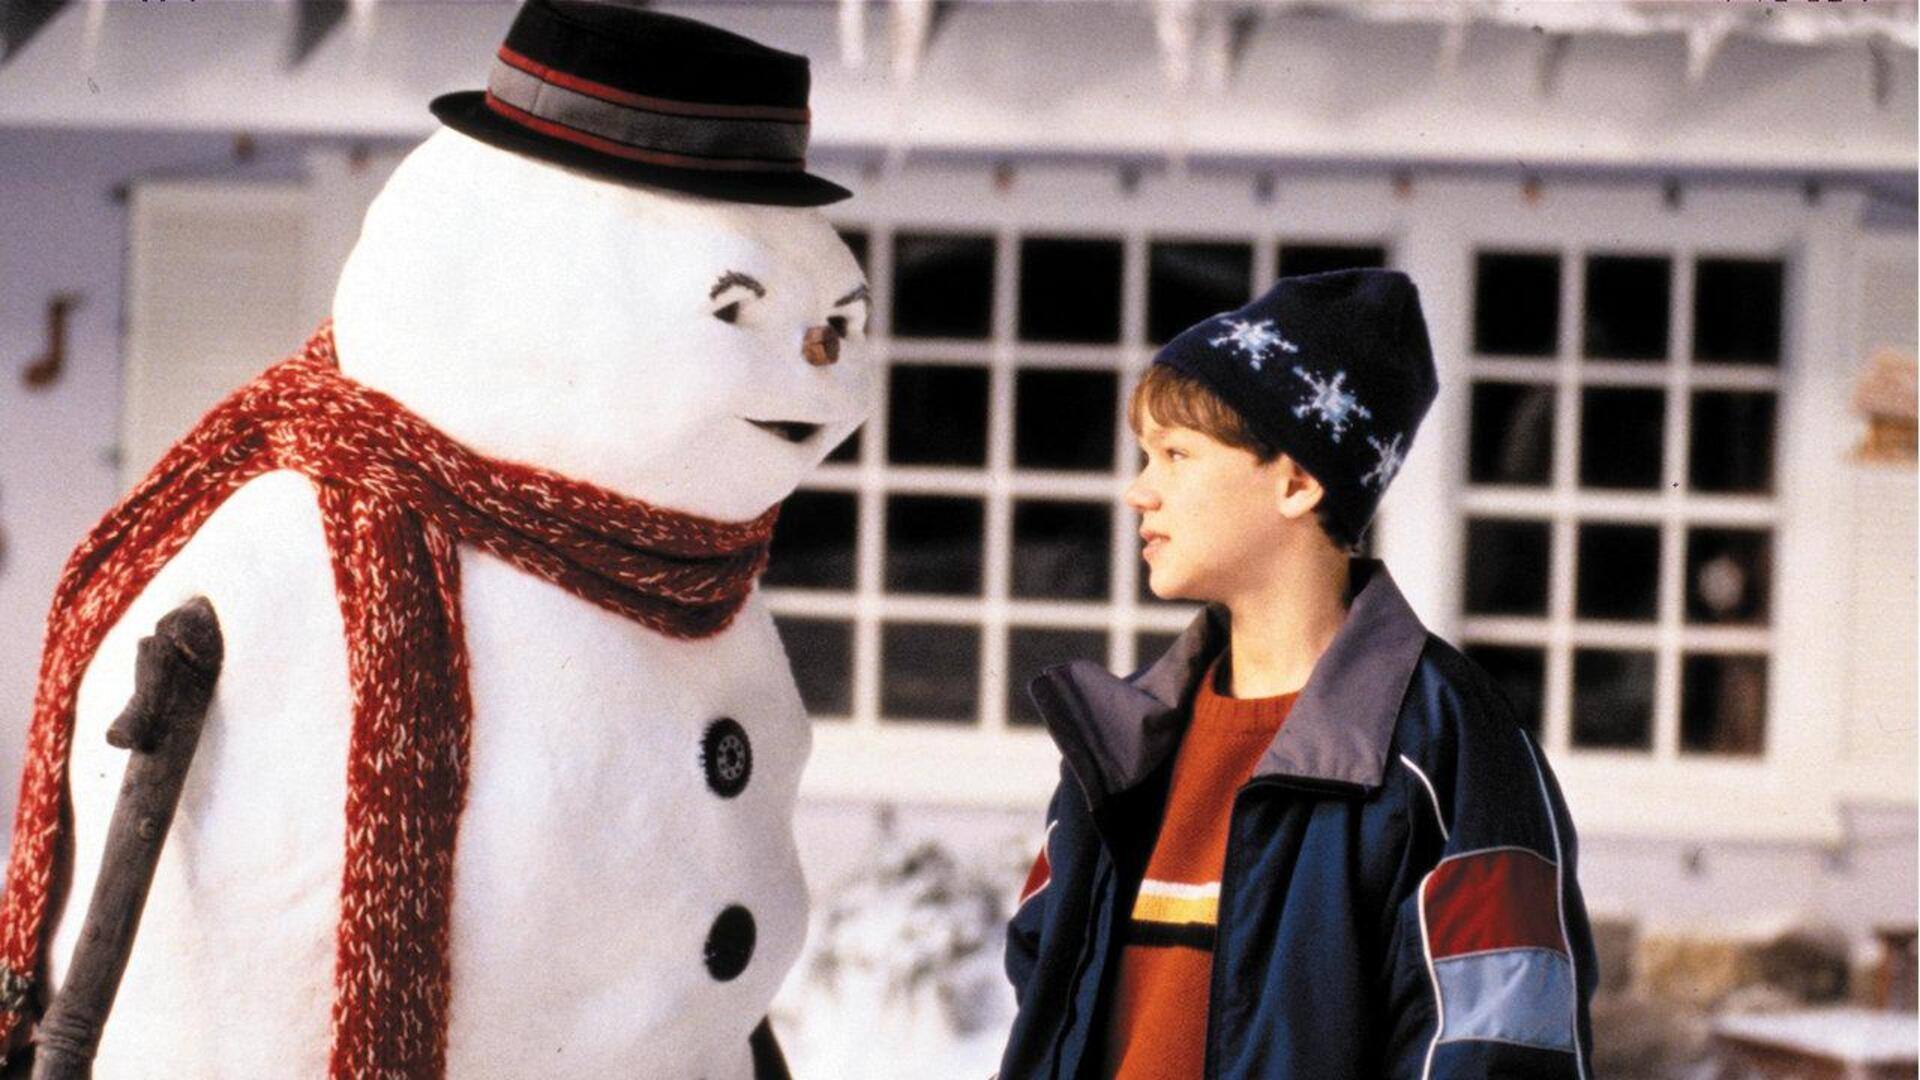 Best Christmas movies to watch on Hulu